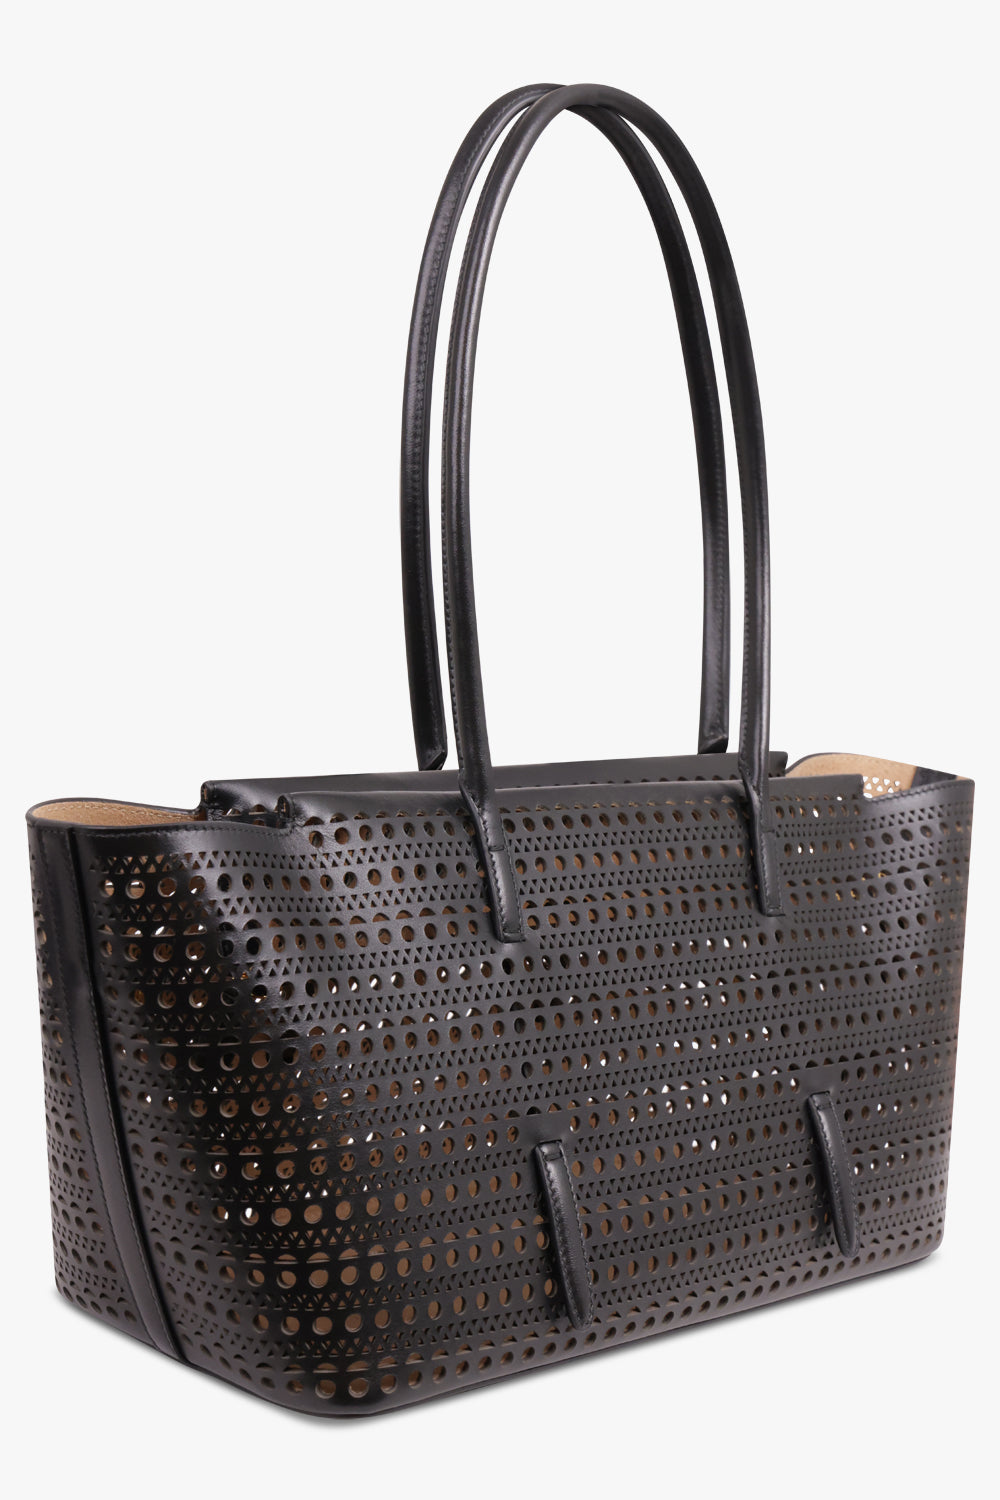 ALAIA BAGS BLACK / 999 - NOIR Neo Mina 32 Perforated Bag | Black